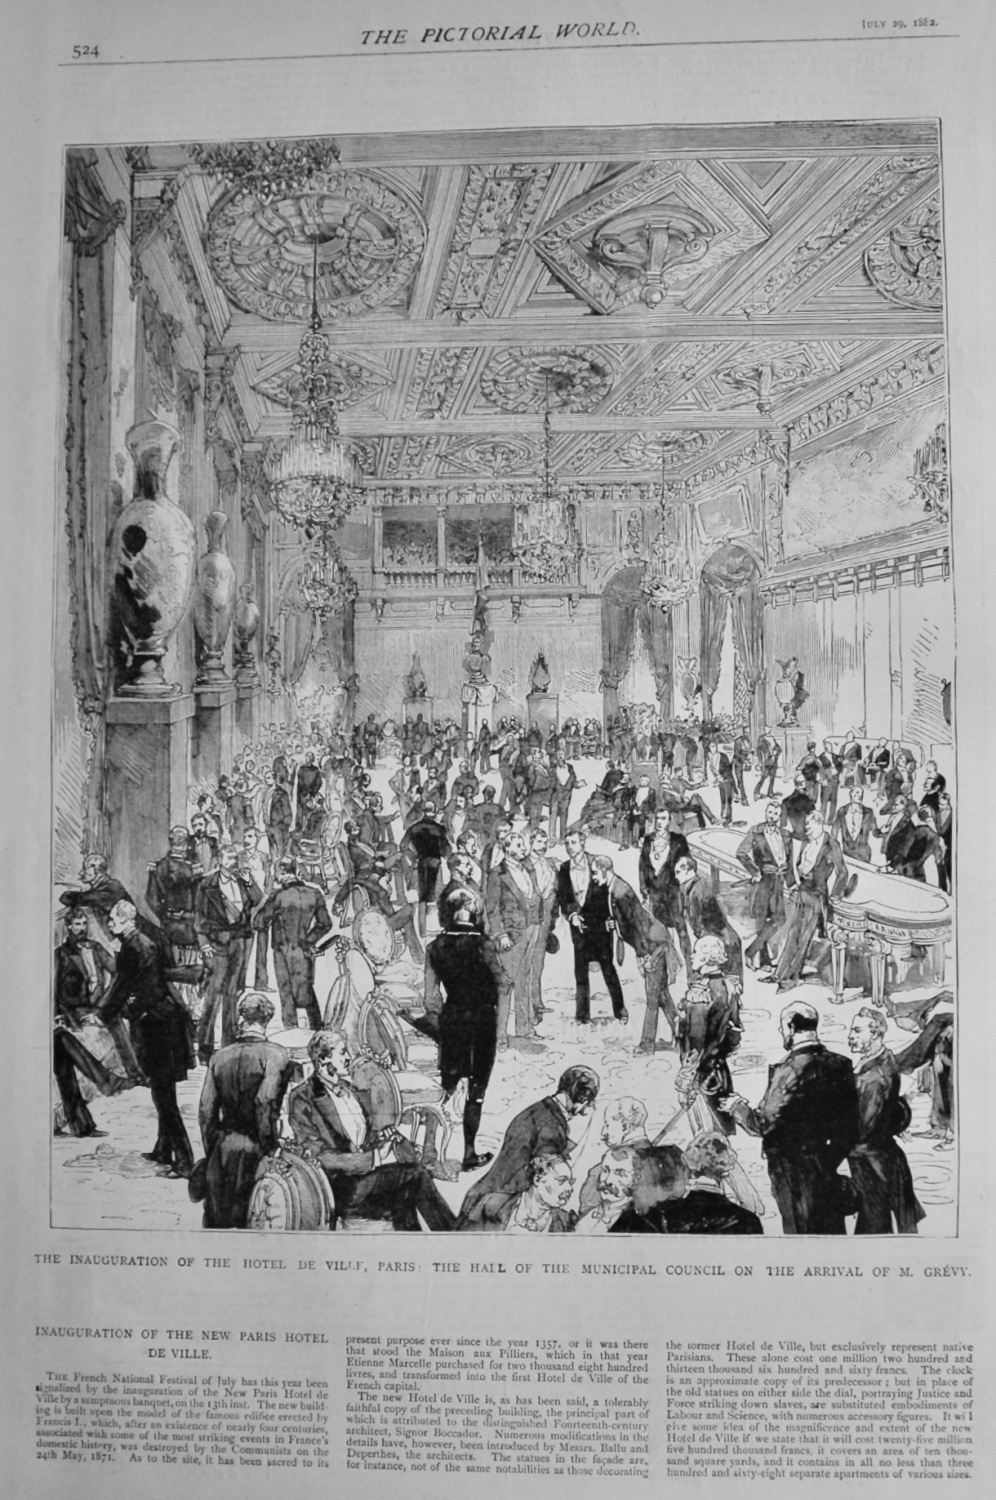 Inauguration of the New Paris Hotel De Ville.  1882.